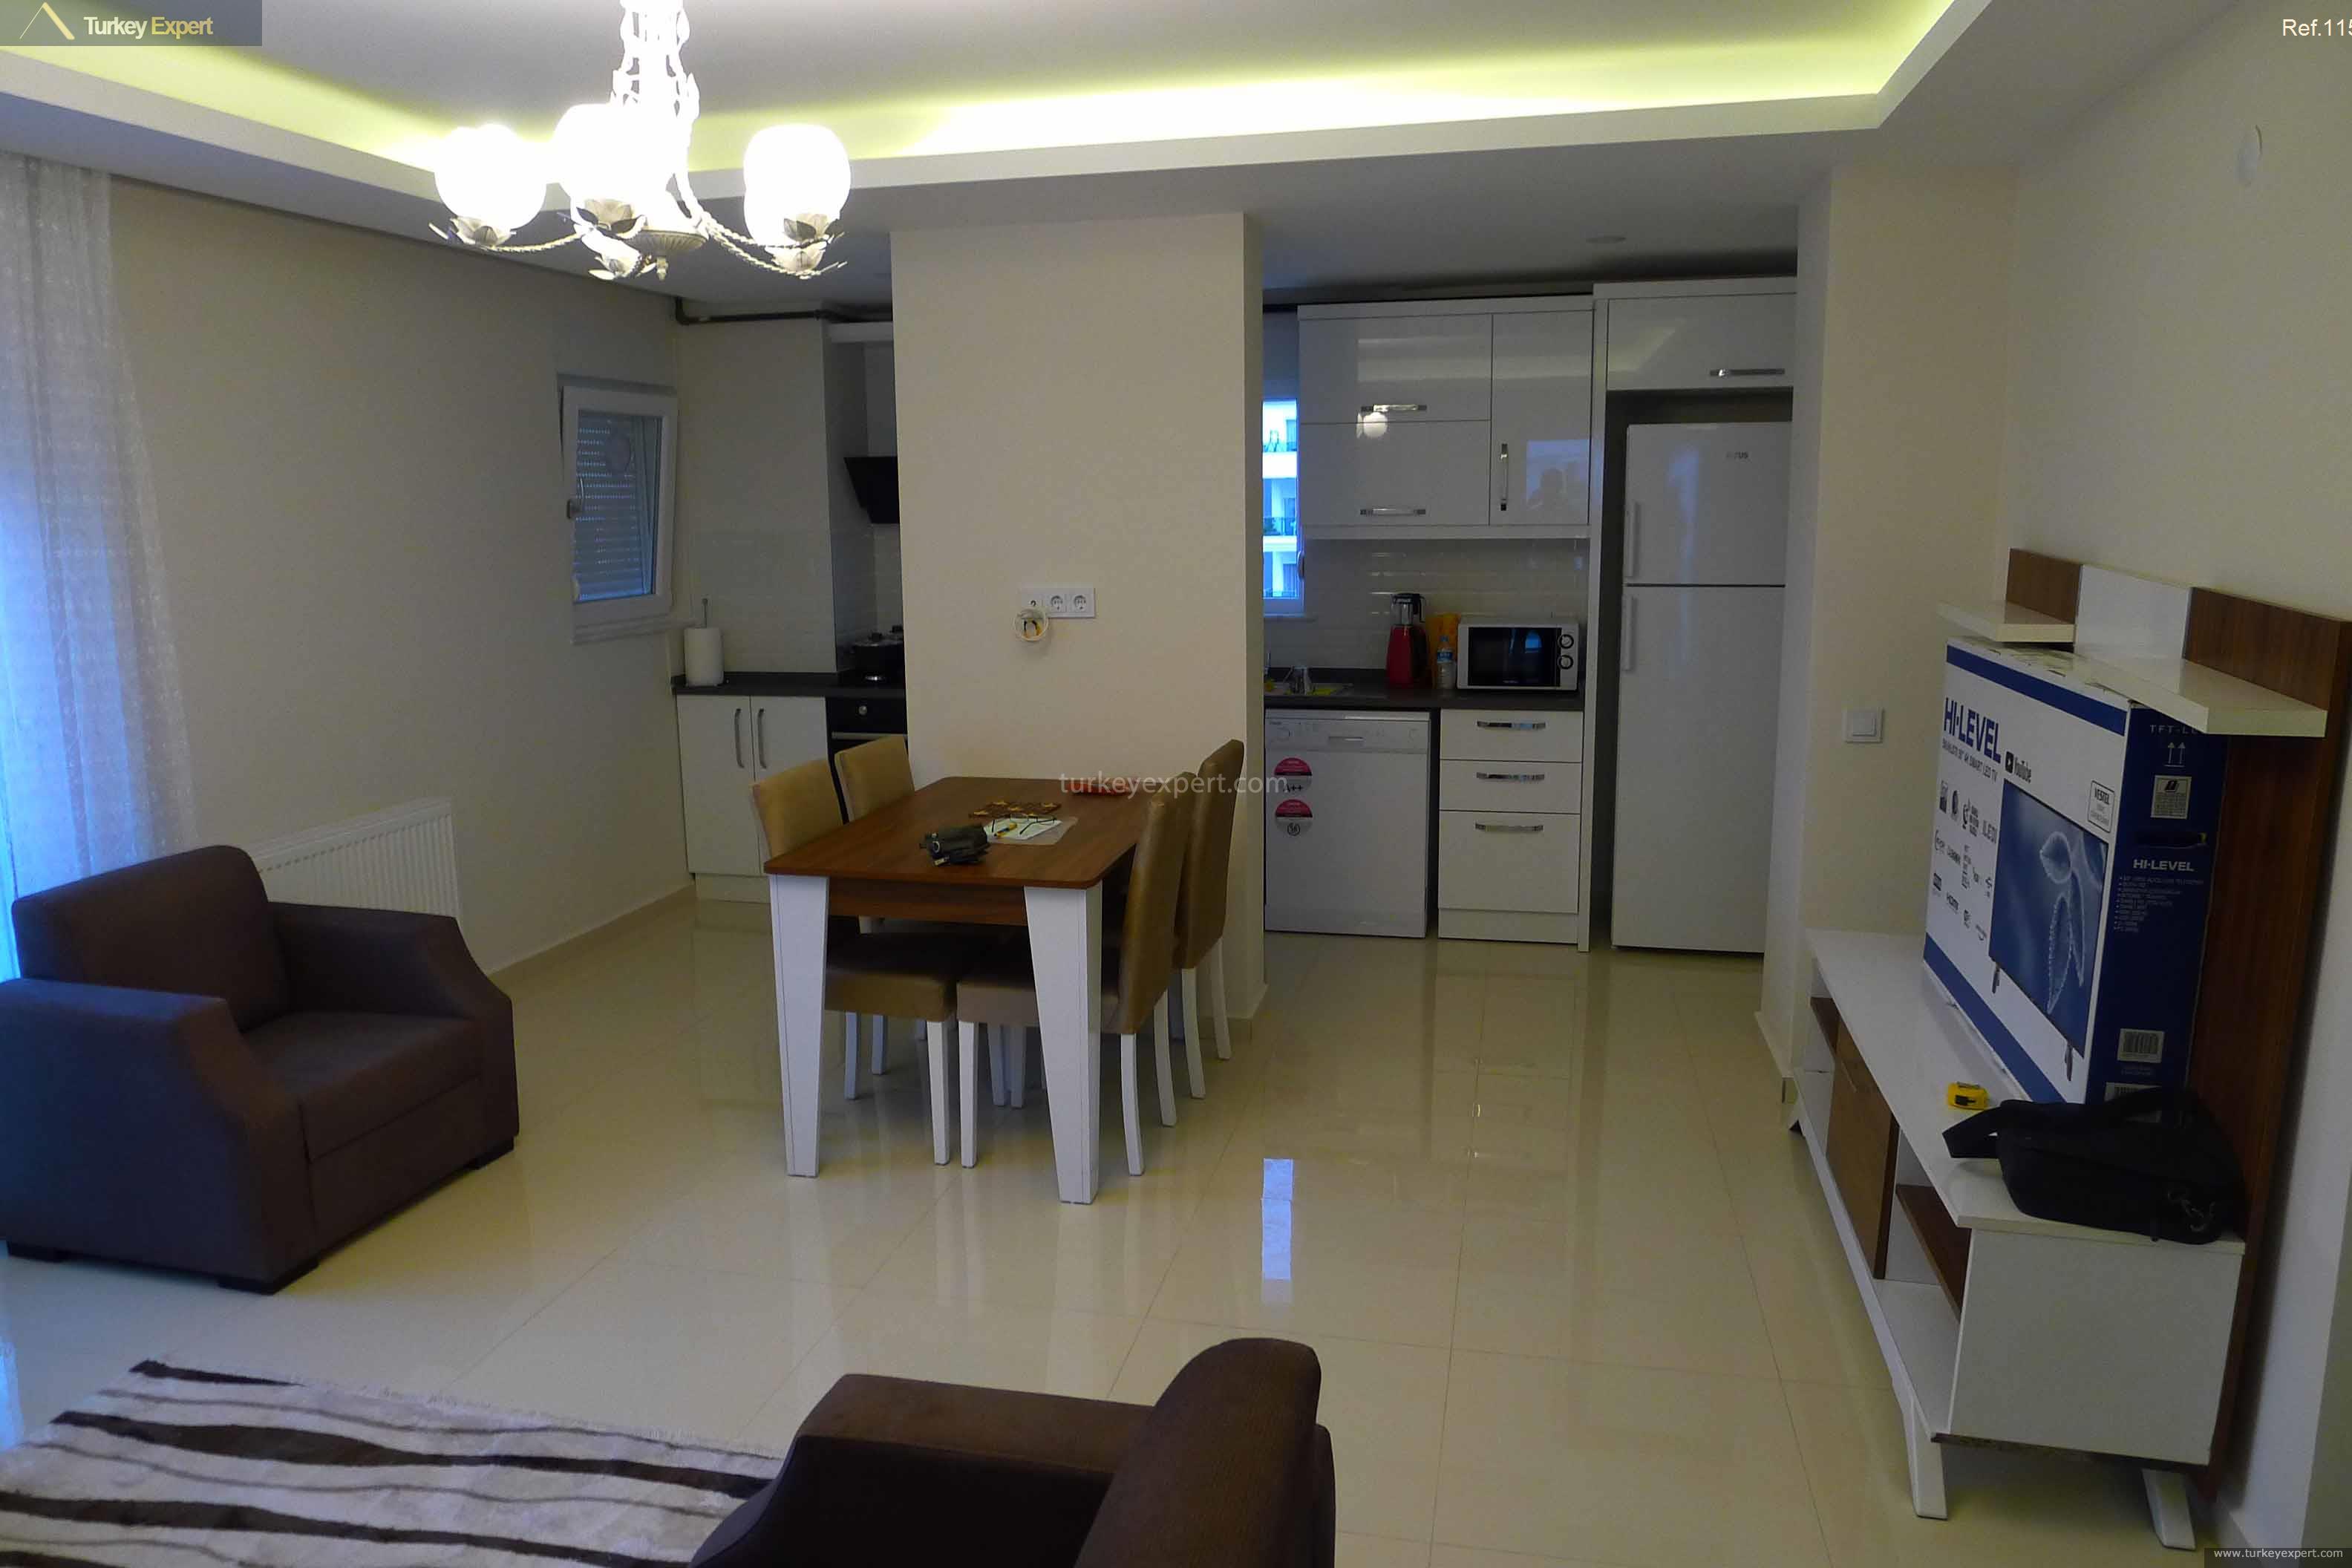 173bedroom apartment 2 km from the sea in antalya konyaalti14